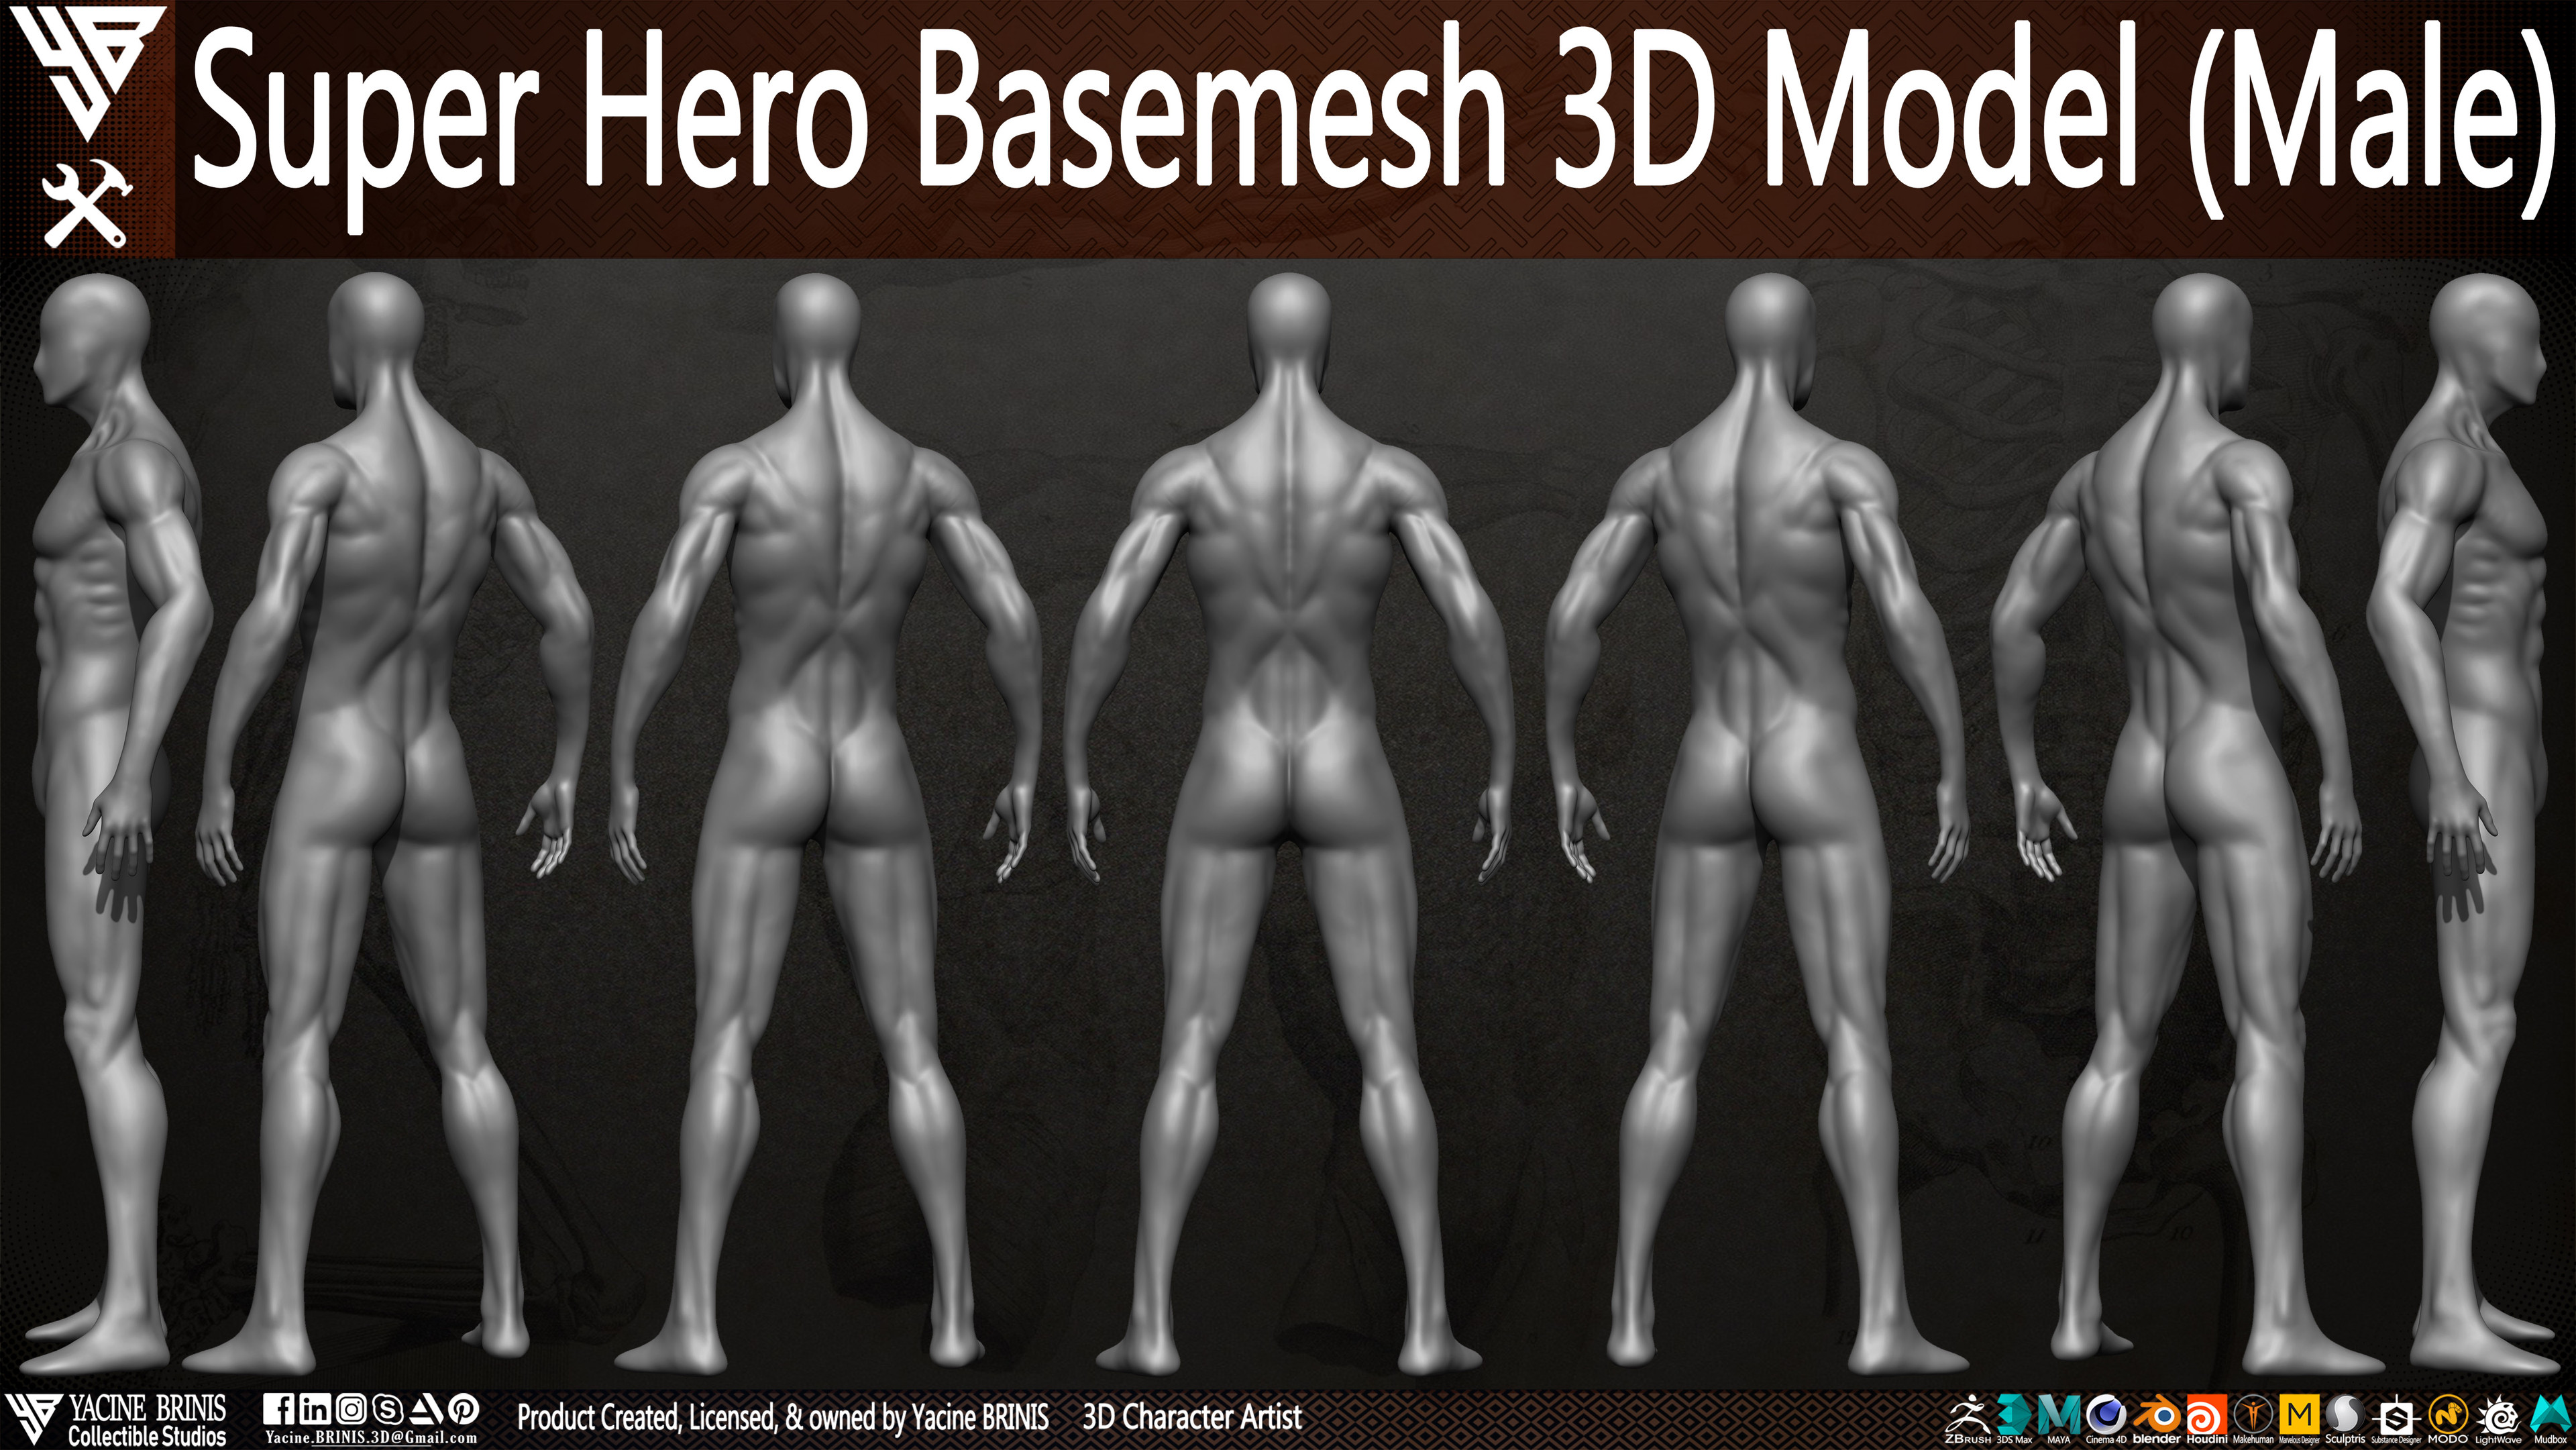 Super Hero Basemesh 3D Model Male By Yacine BRINIS Vol 01 Set 002